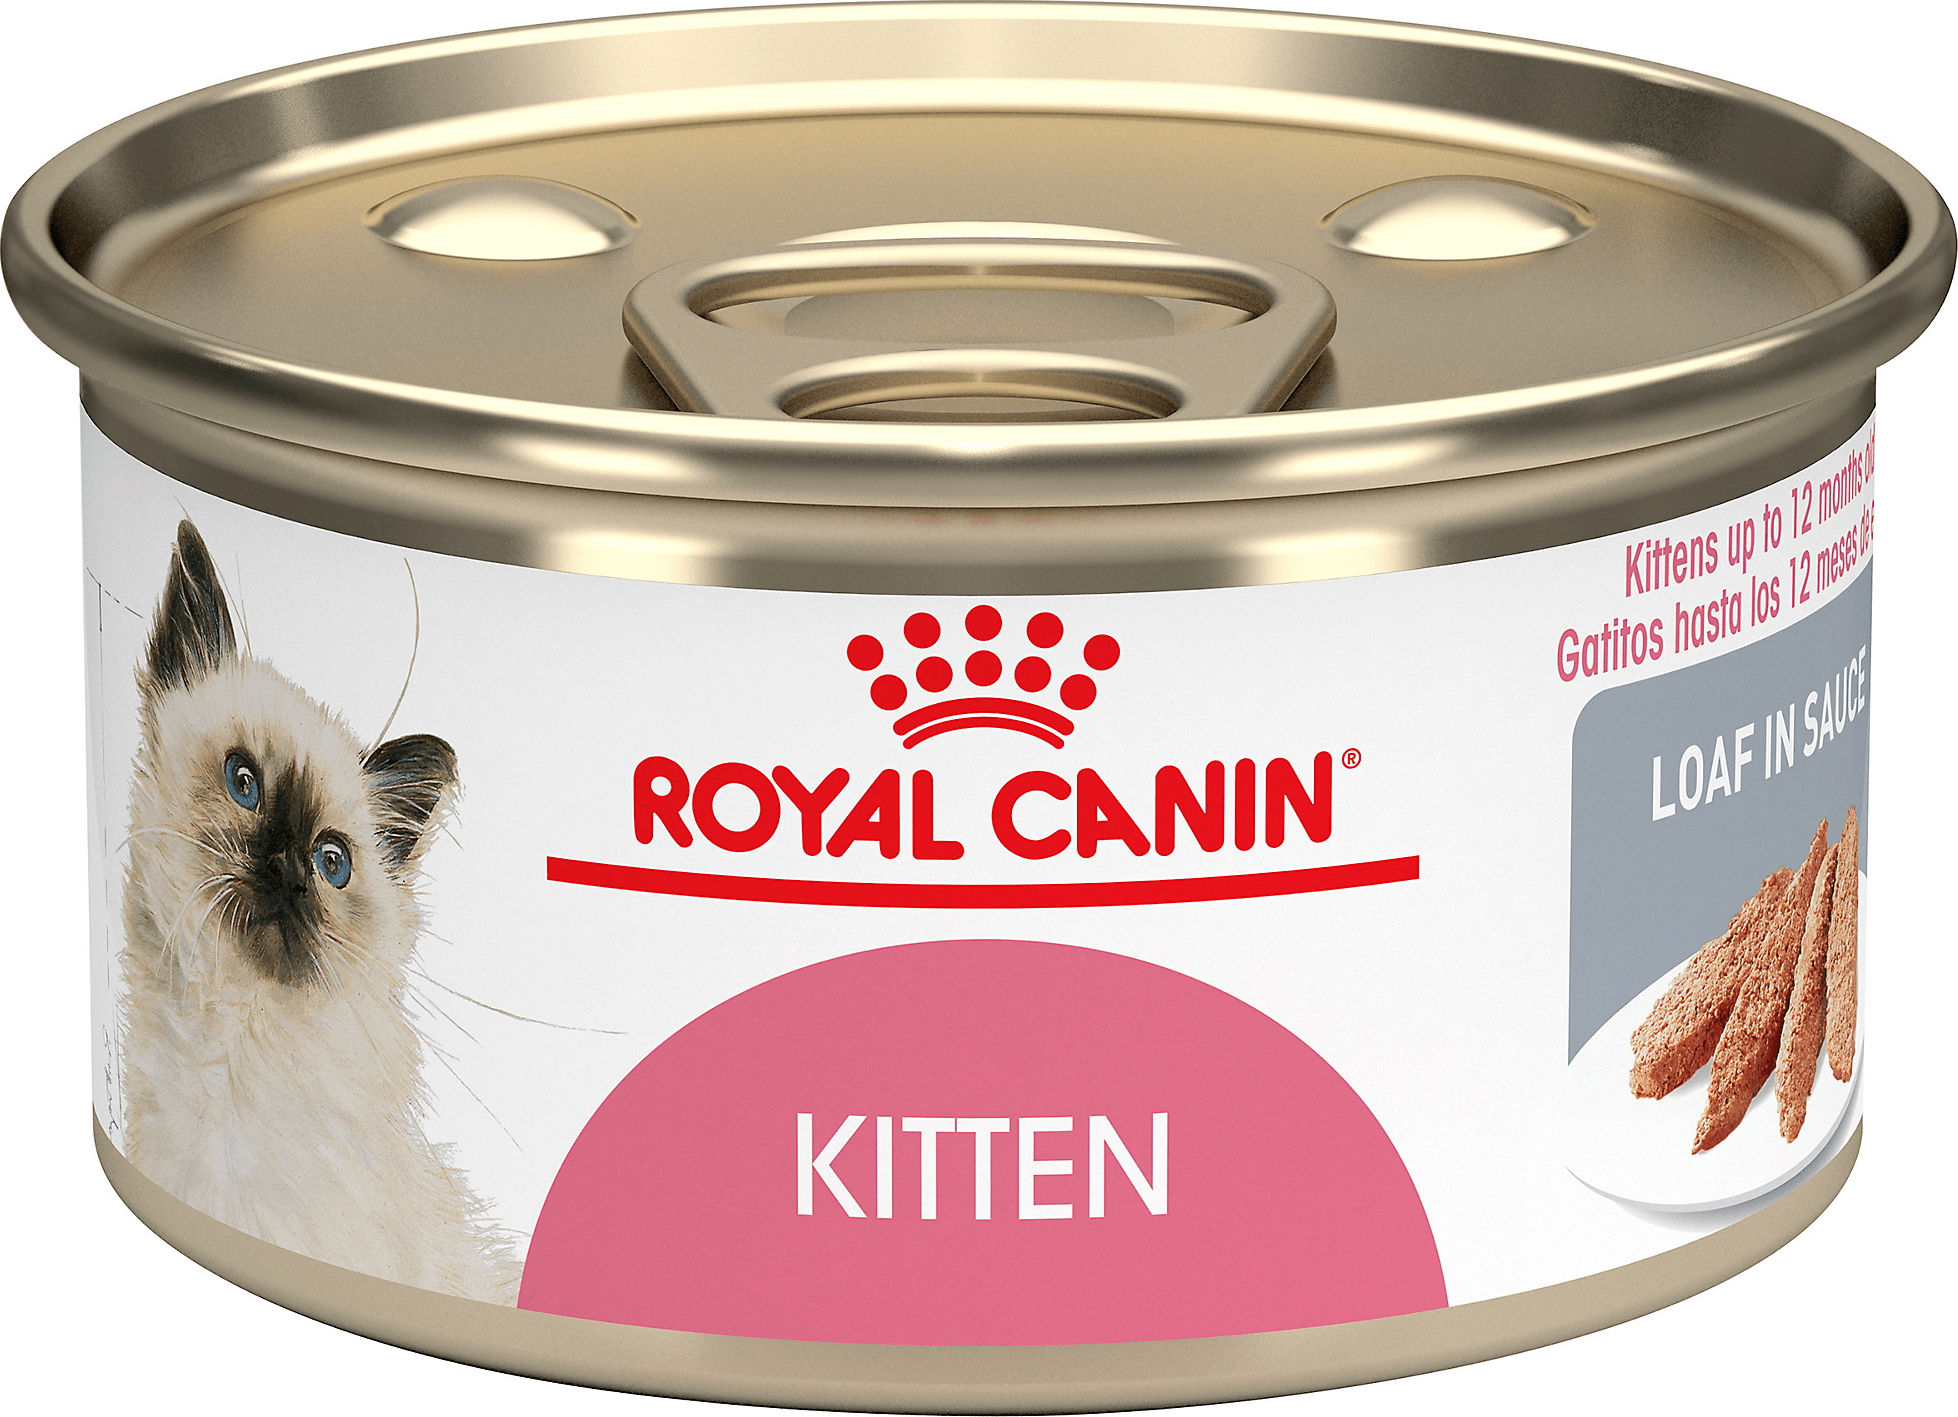 Royal Canin Kitten Loaf In Sauce